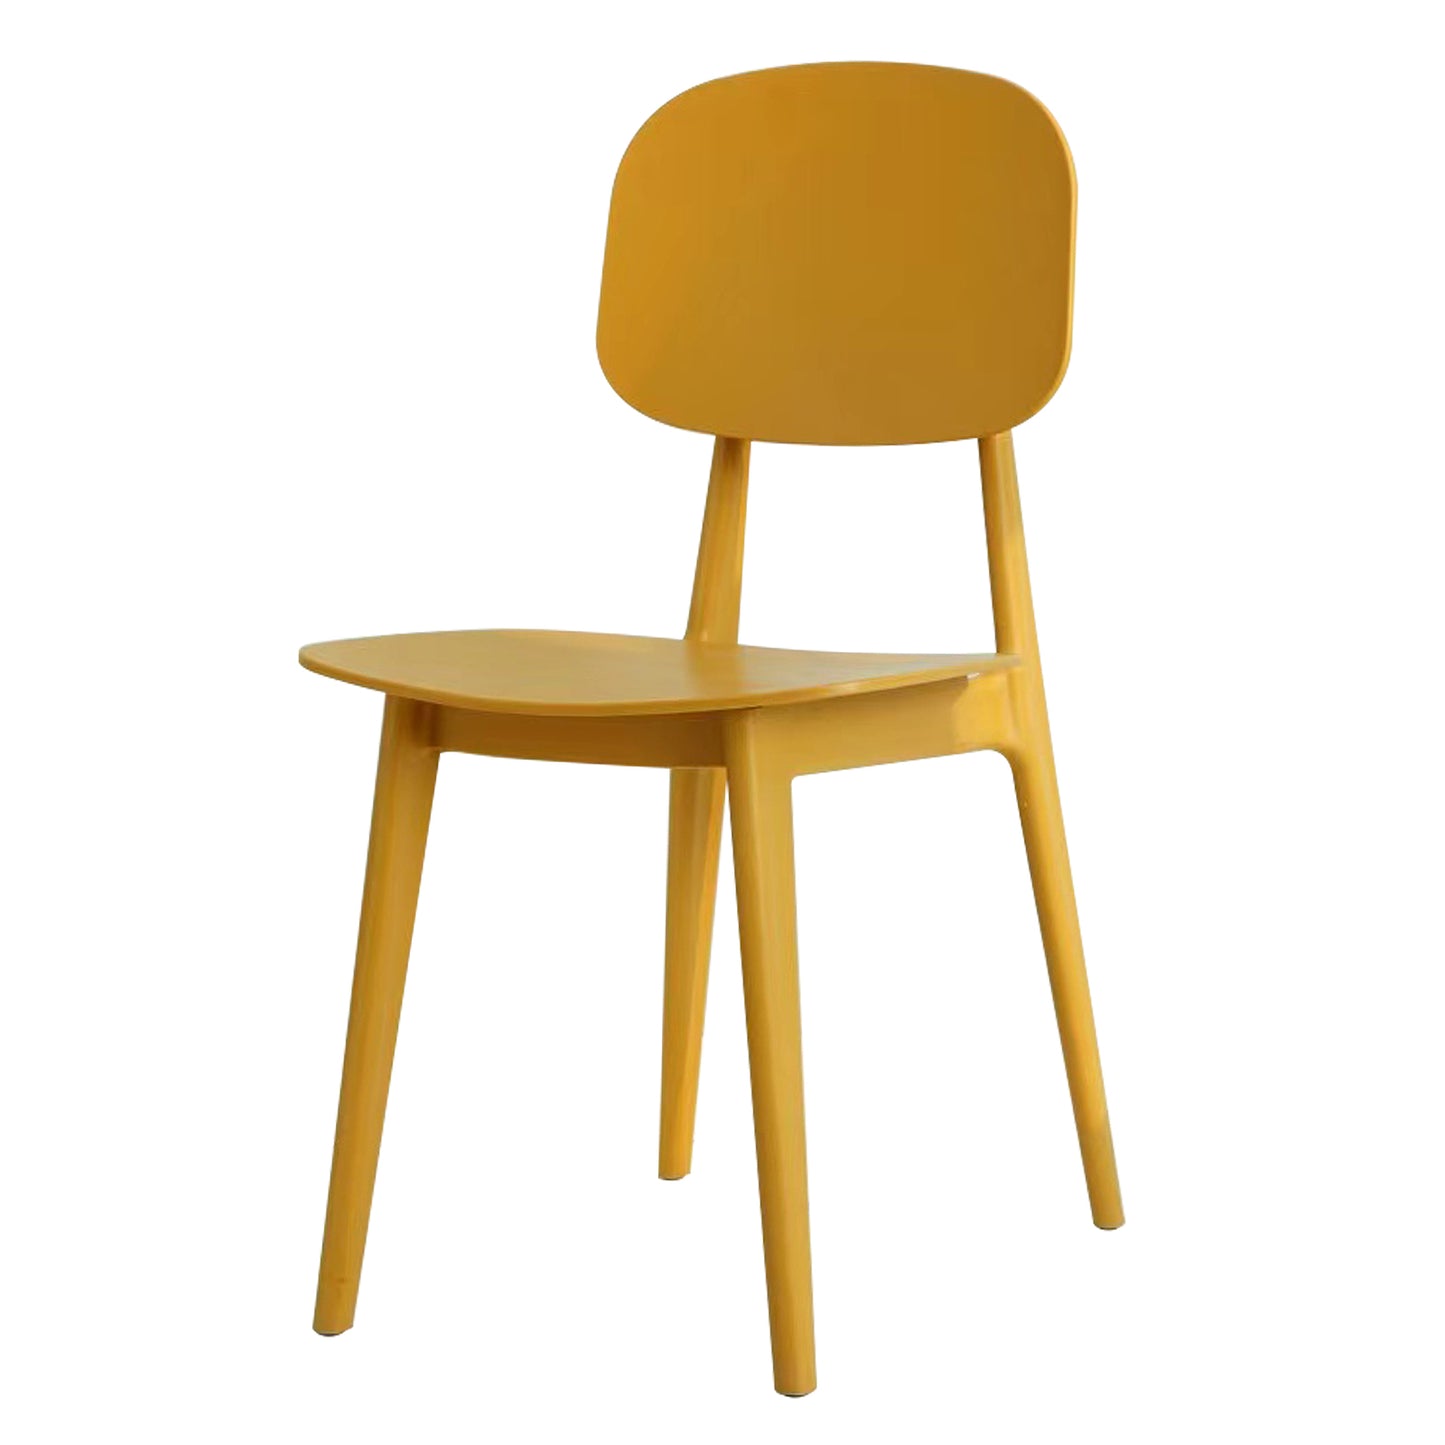 Chaise style contemporain SMOOTH jaune moderne et confortable